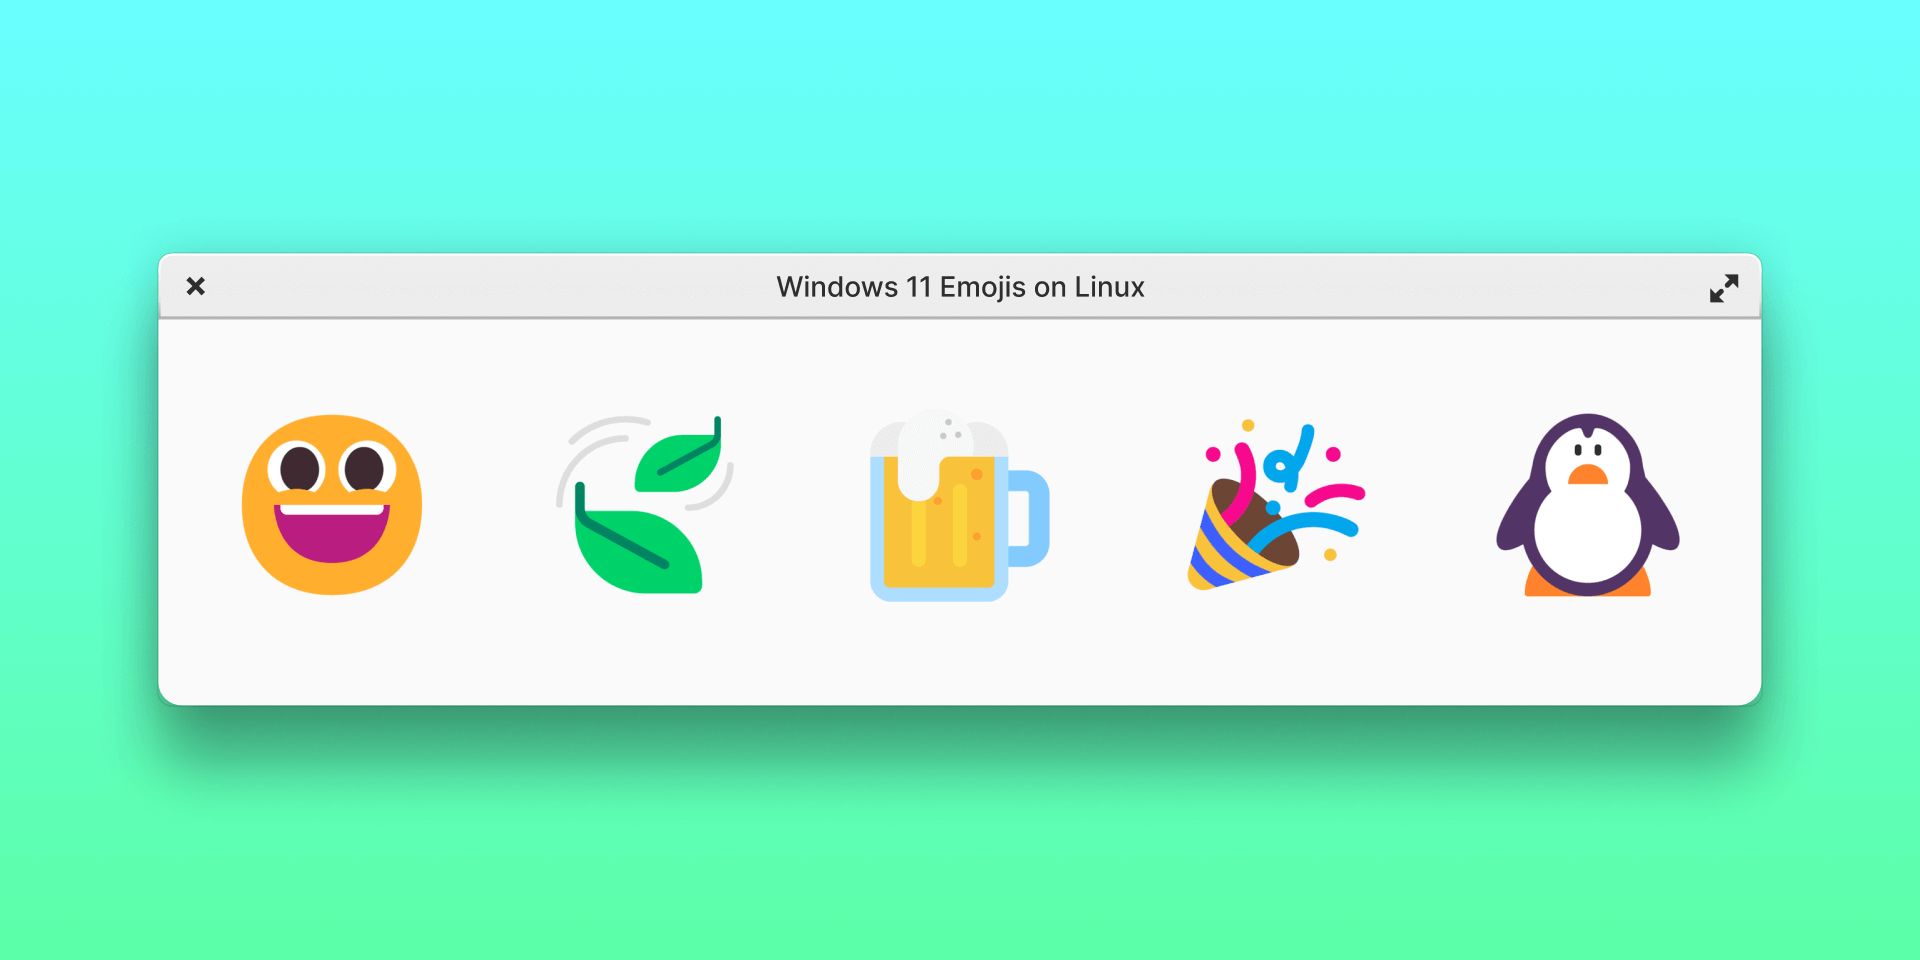 Enable Windows 11 Emojis on Linux